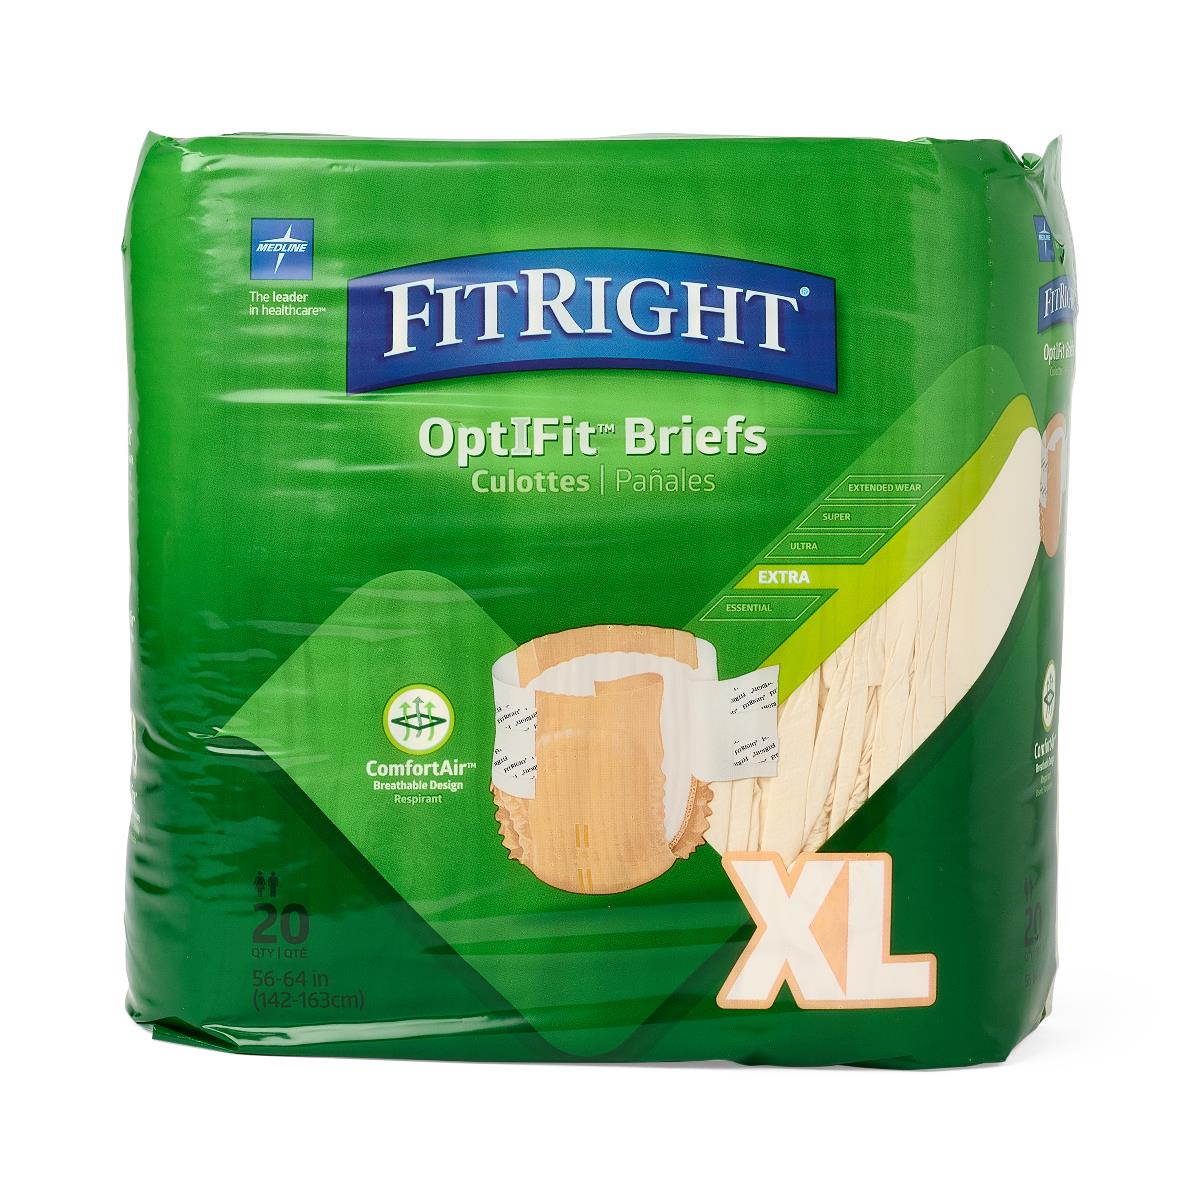 Medline FitRight OptiFit Extra Brief Size XL 56-64, 80/cs